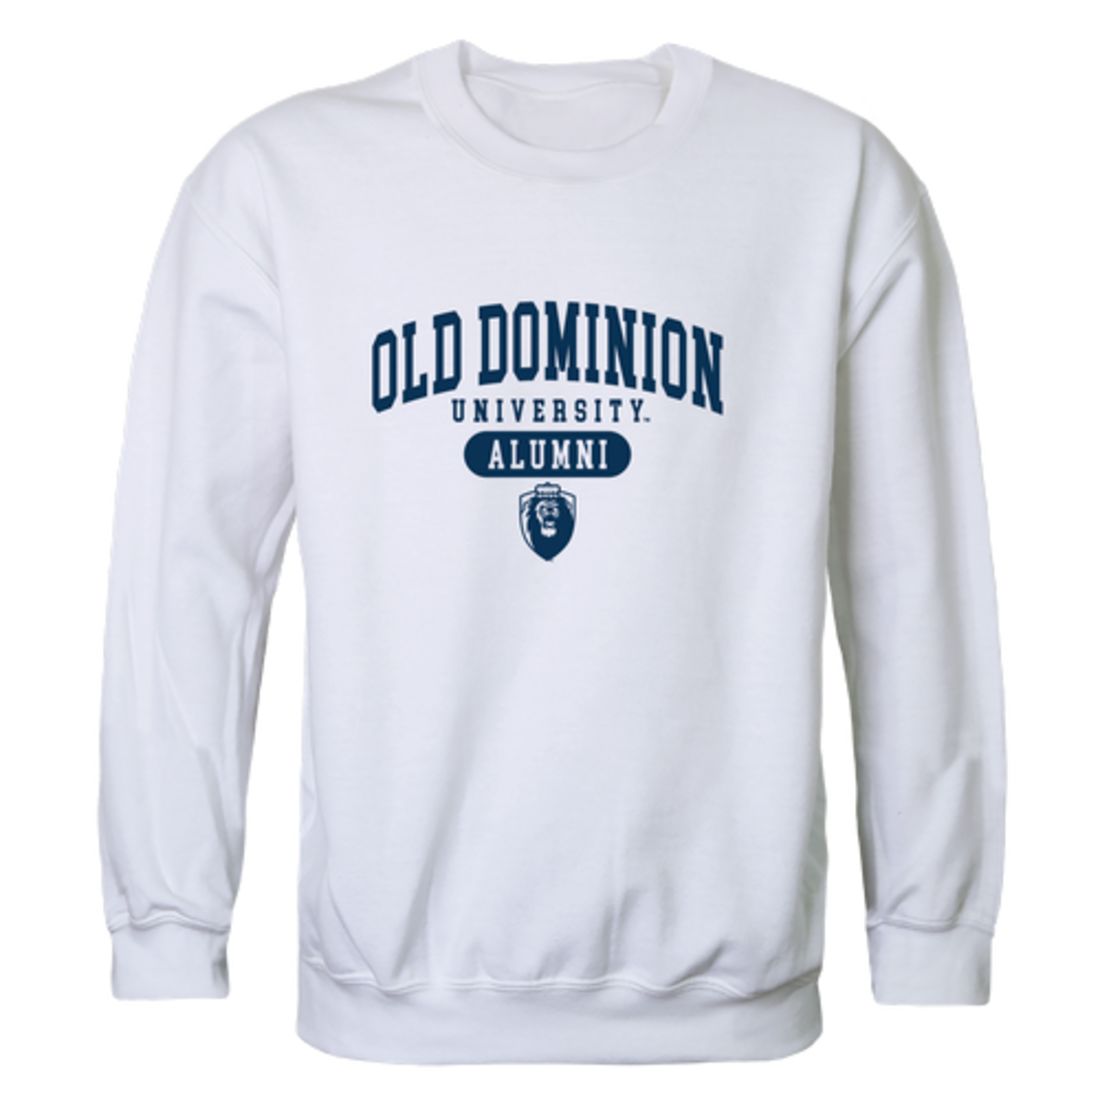 ODU Old Dominion University Monarchs Alumni Fleece Crewneck Pullover Sweatshirt Heather Gray-Campus-Wardrobe